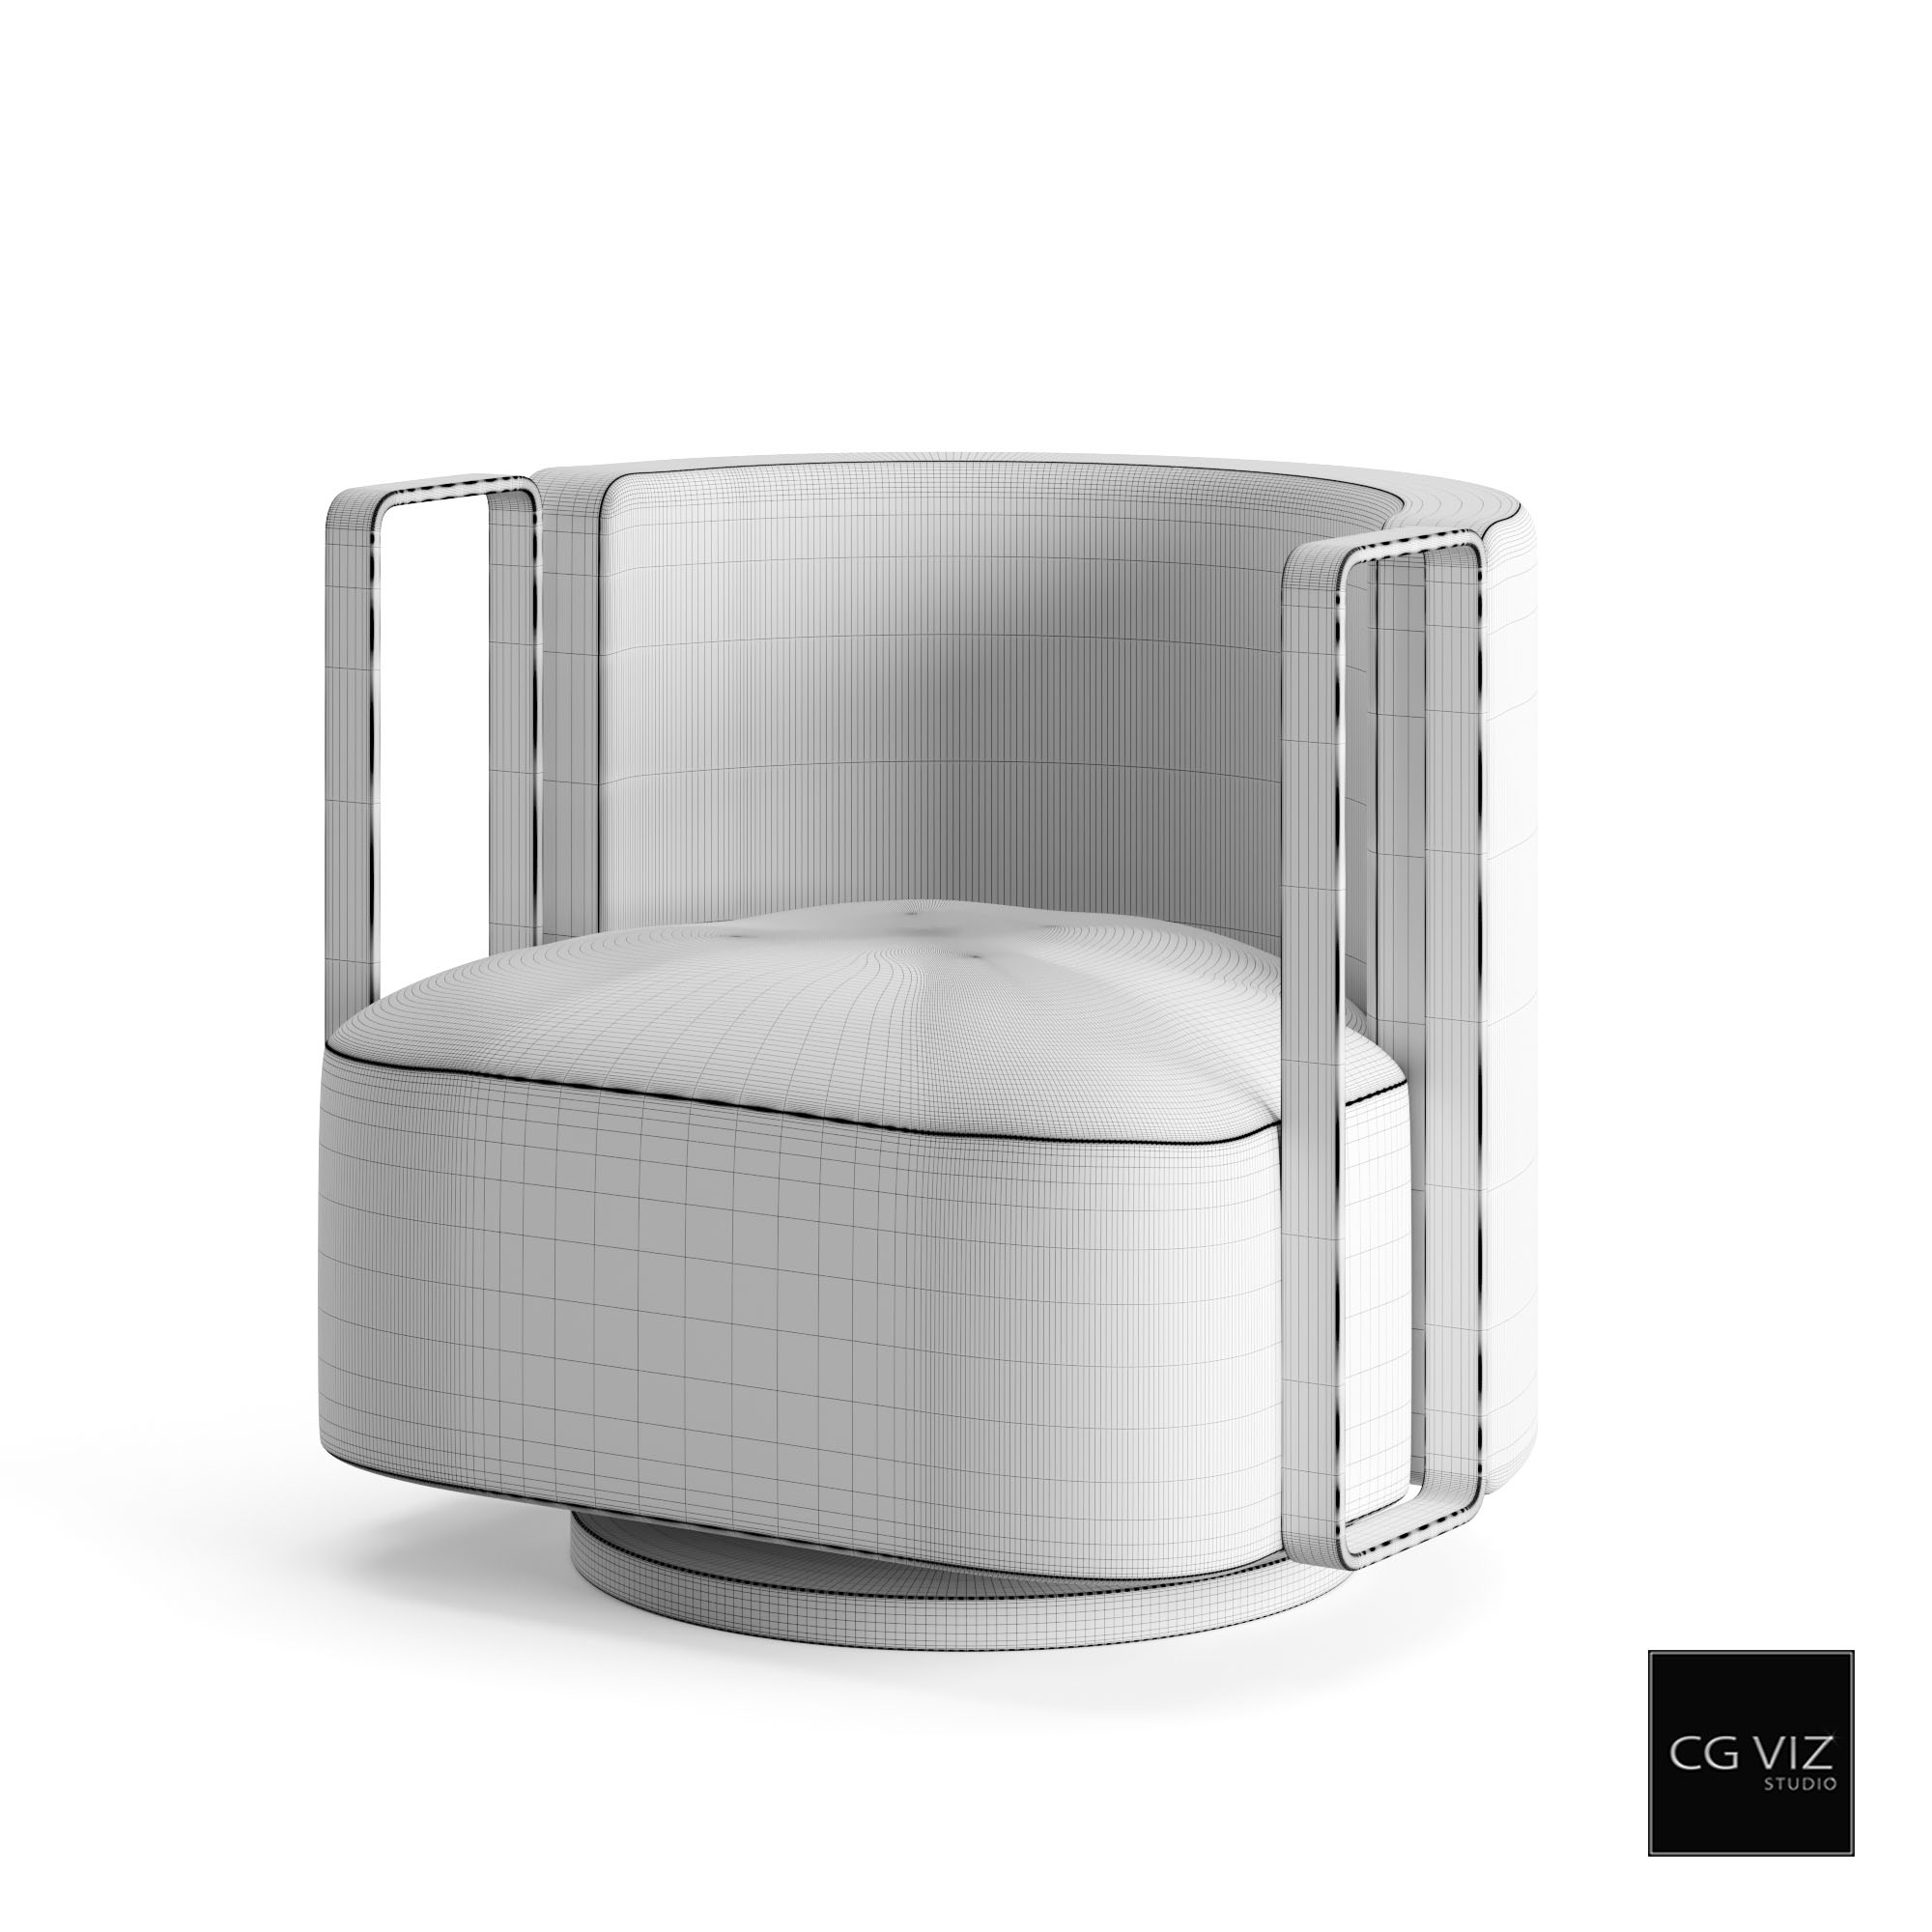 Wireframe View of Fendi Casa Kelly Armchair 3D Model by CG Viz Studio